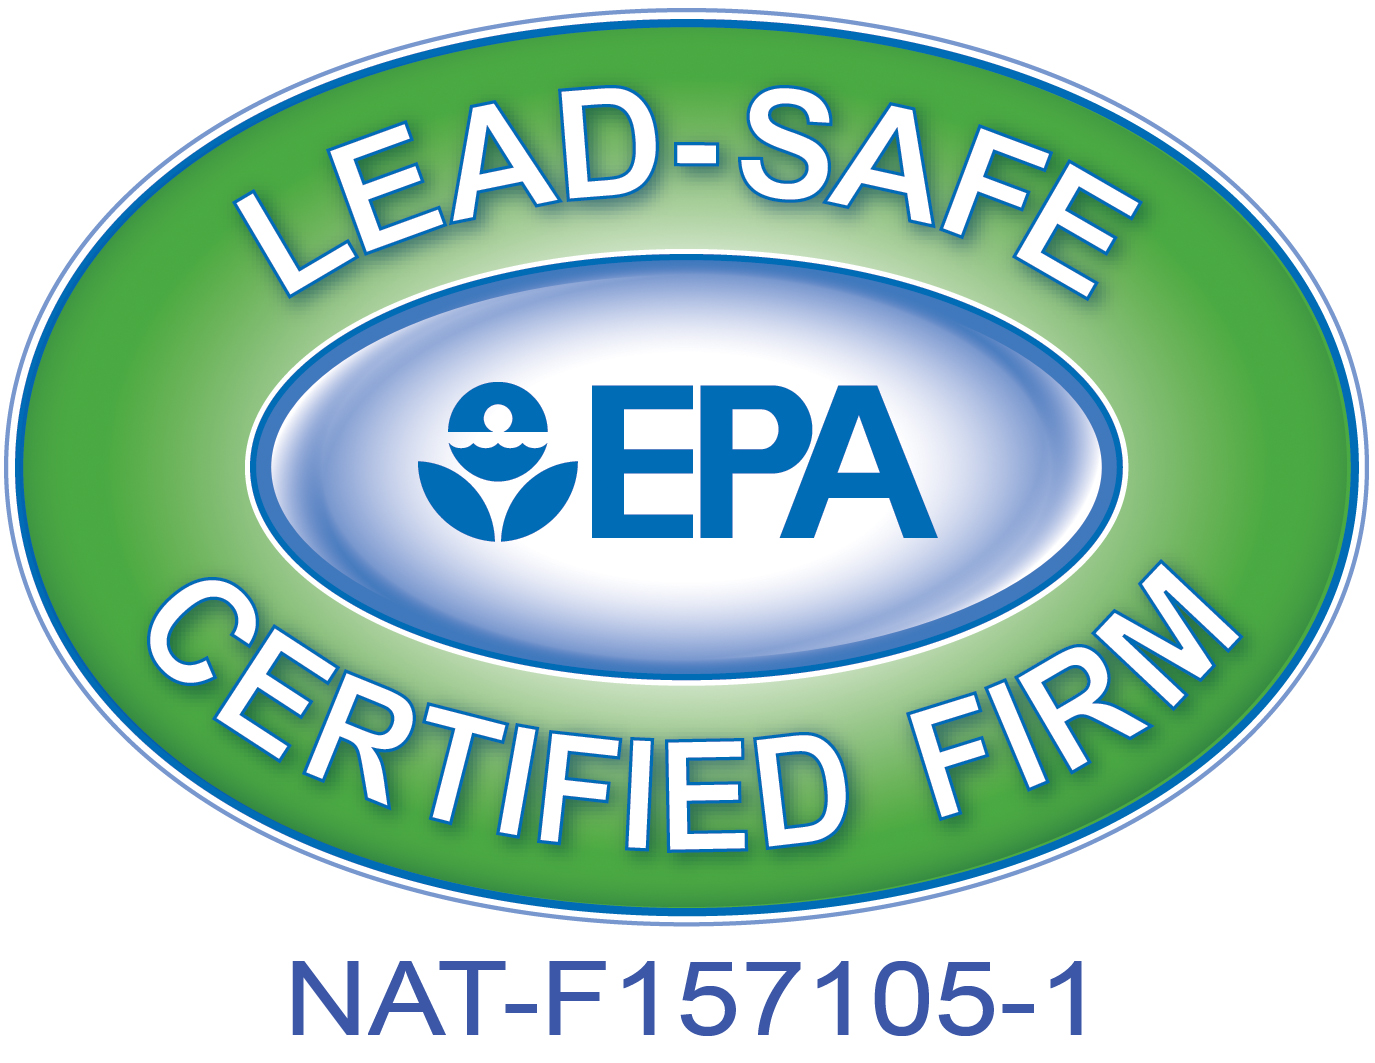 EPA Certified Firm Badge